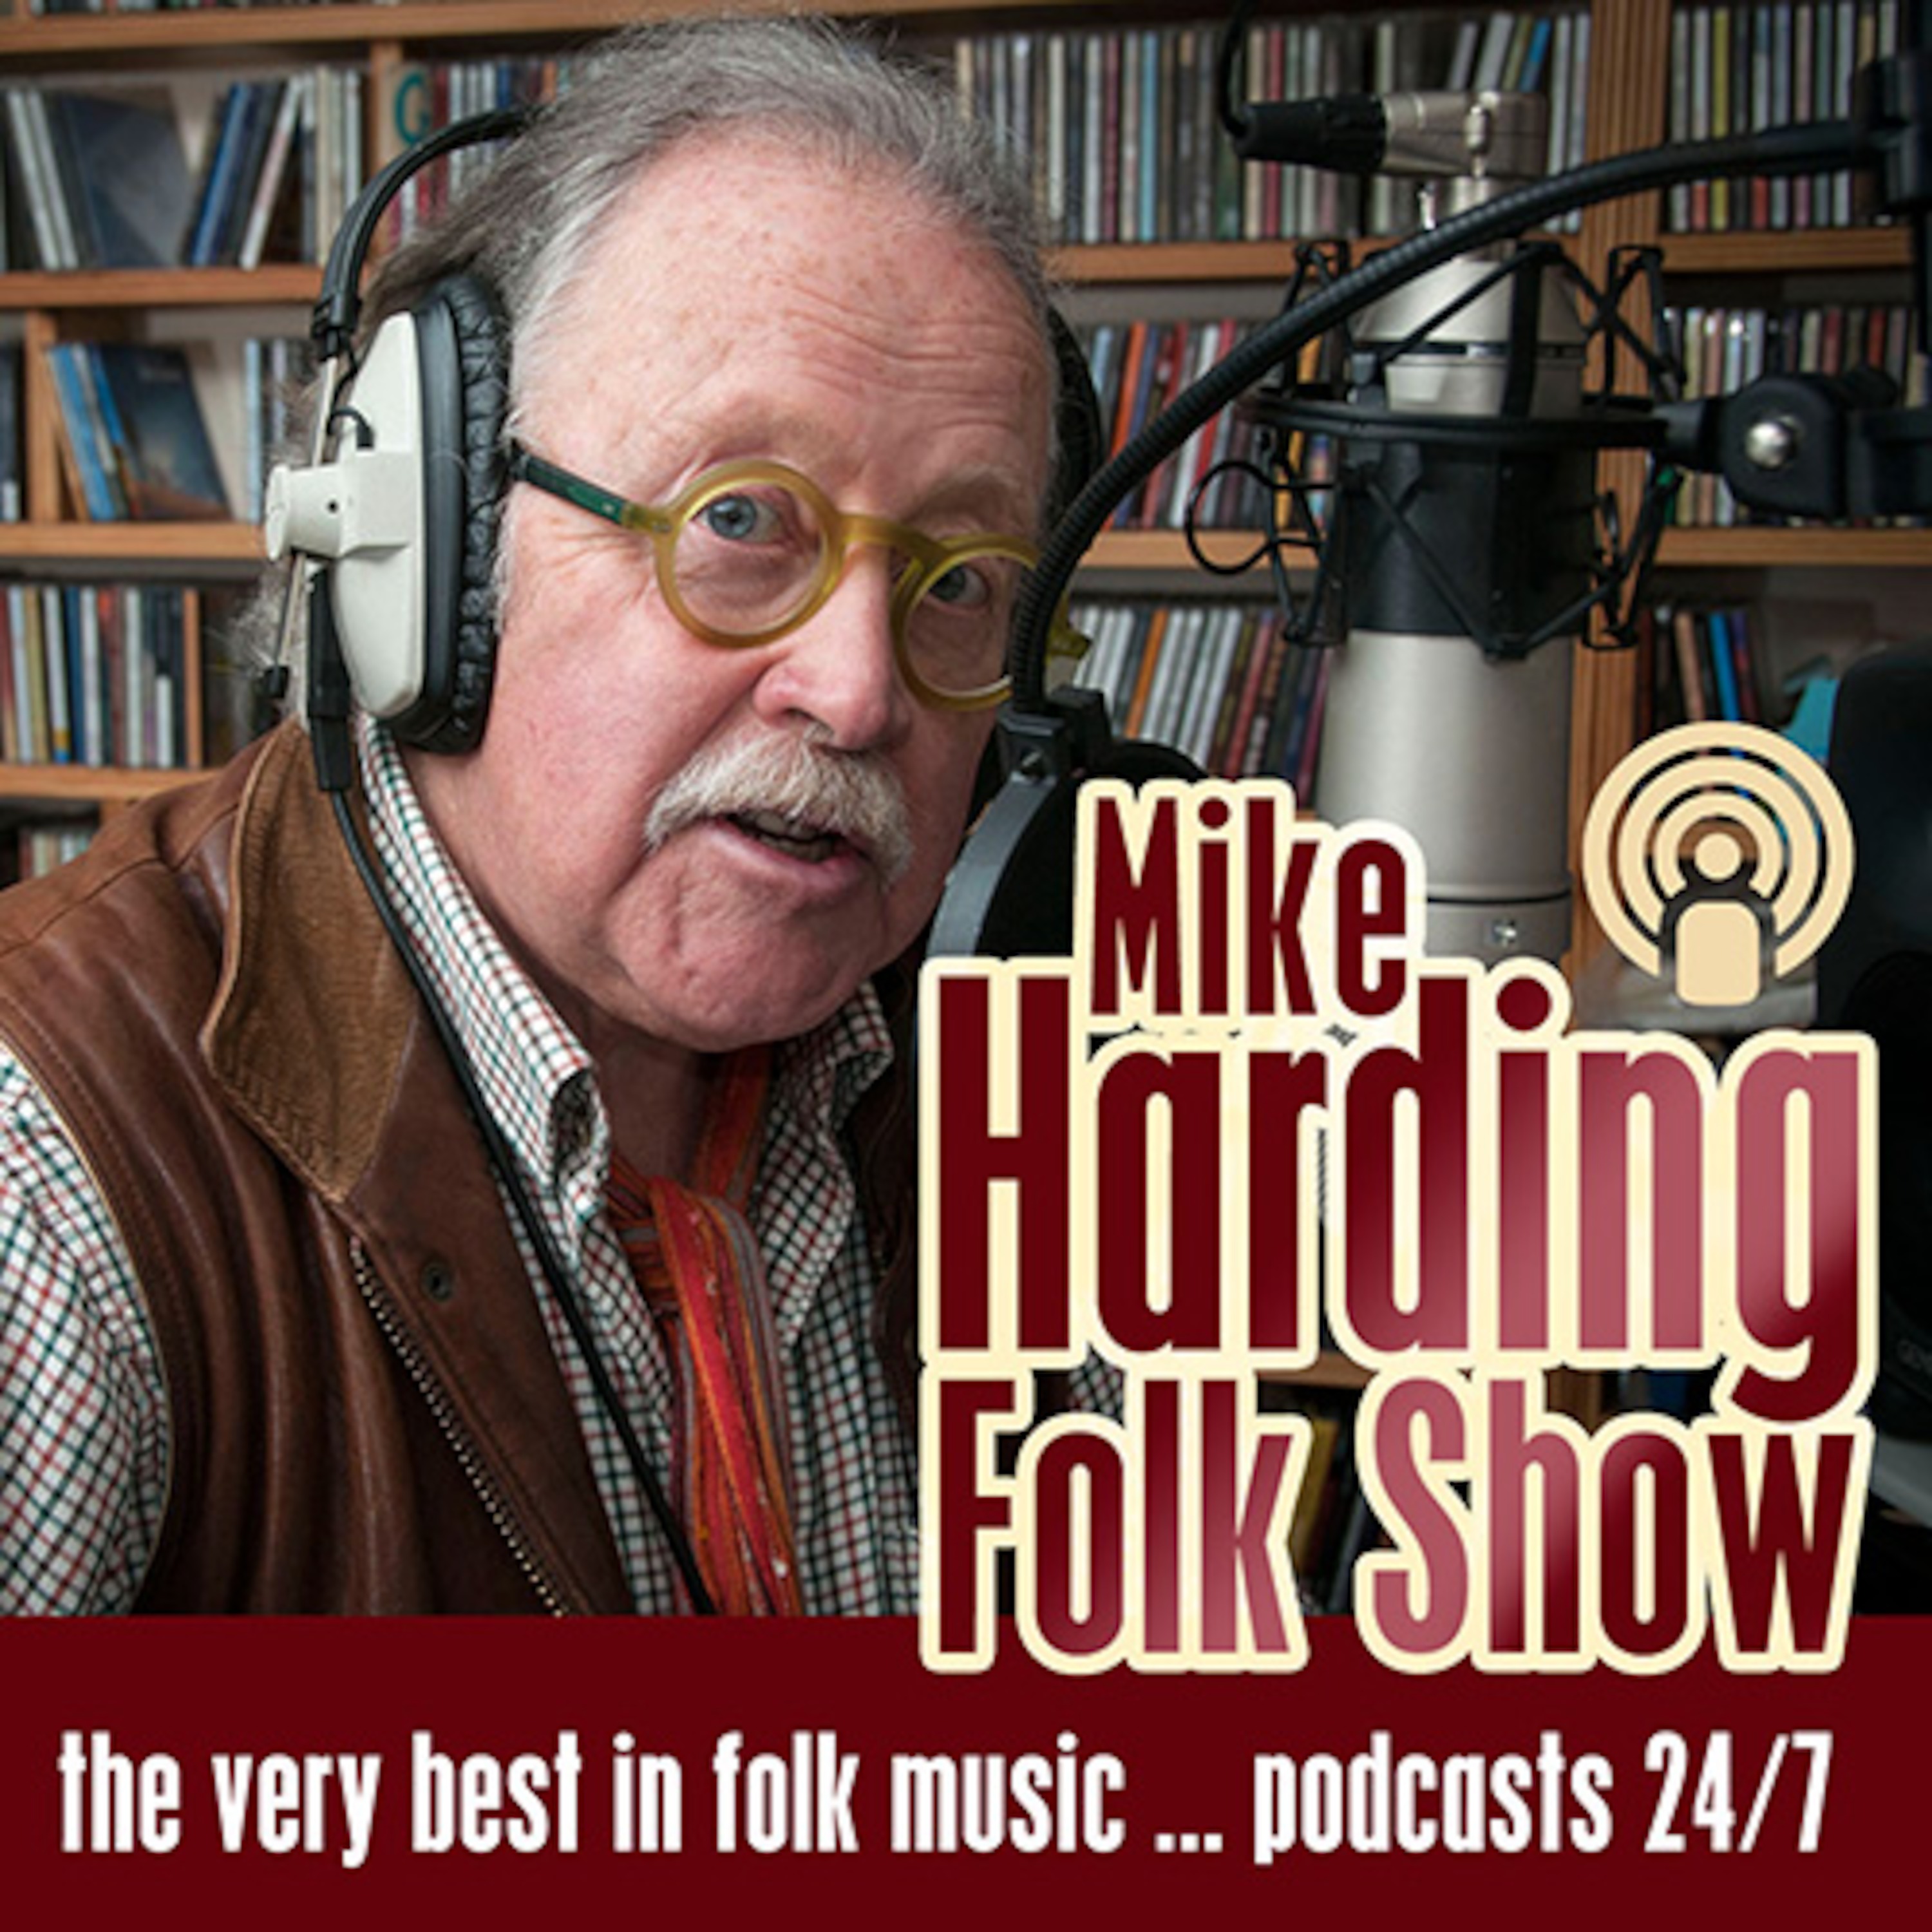 Mike Harding Folk Show 138